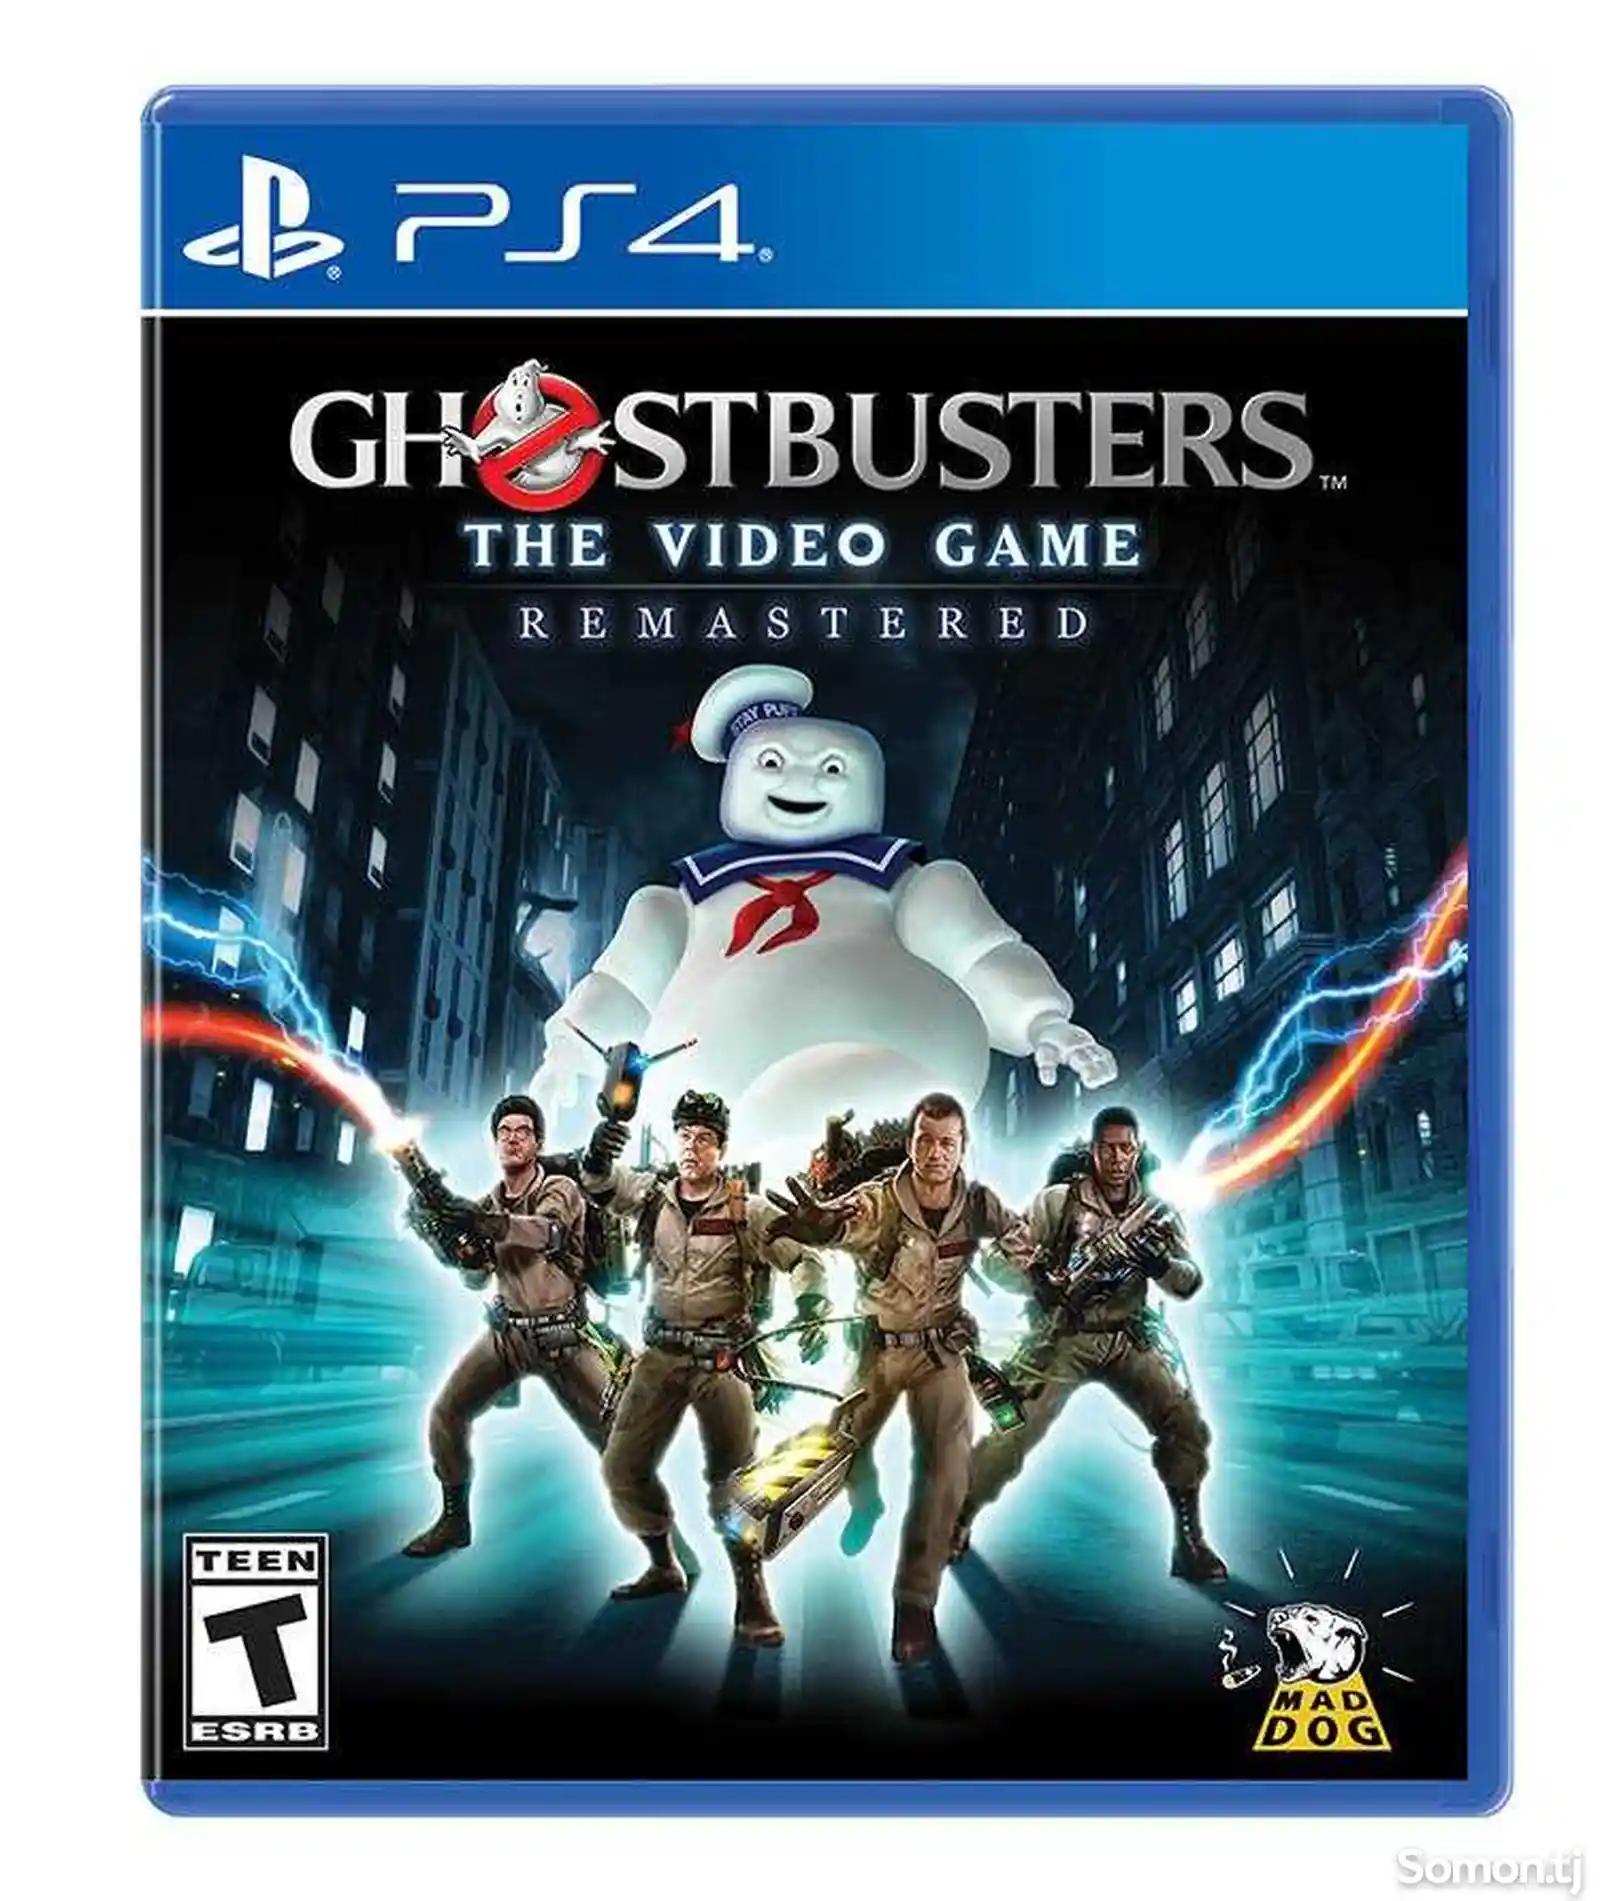 Игра Ghostbusters remastered для PS-4 / 5.05 / 6.72 / 7.02 / 7.55 / 9.00 /-1